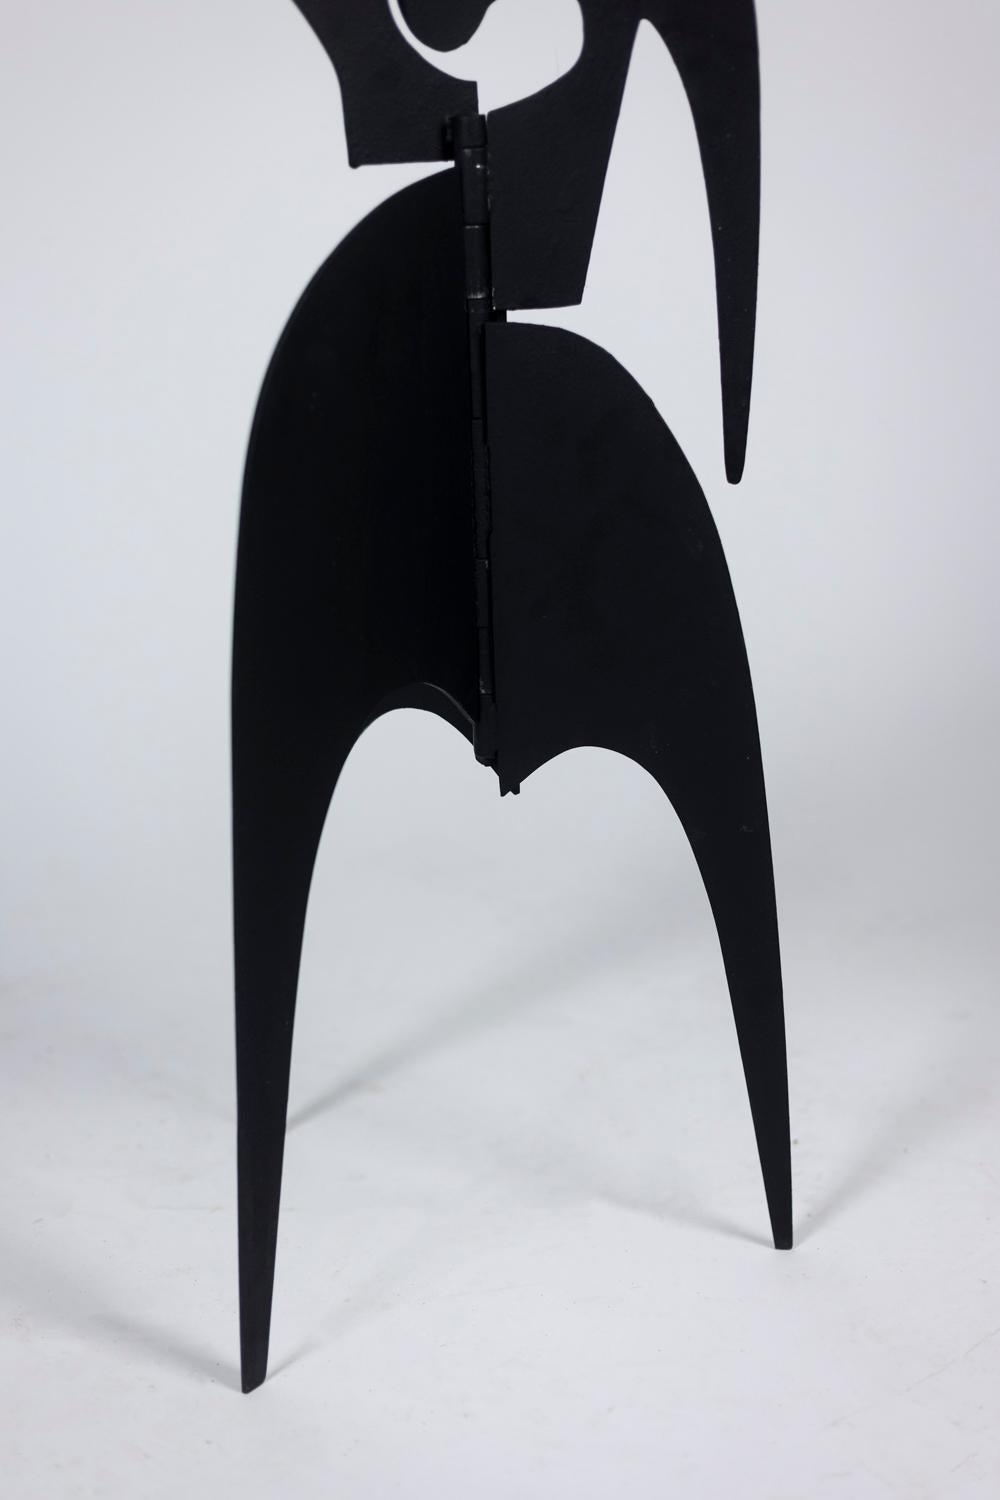 Metal Standing sculpture “Jouve”, contemporary work For Sale